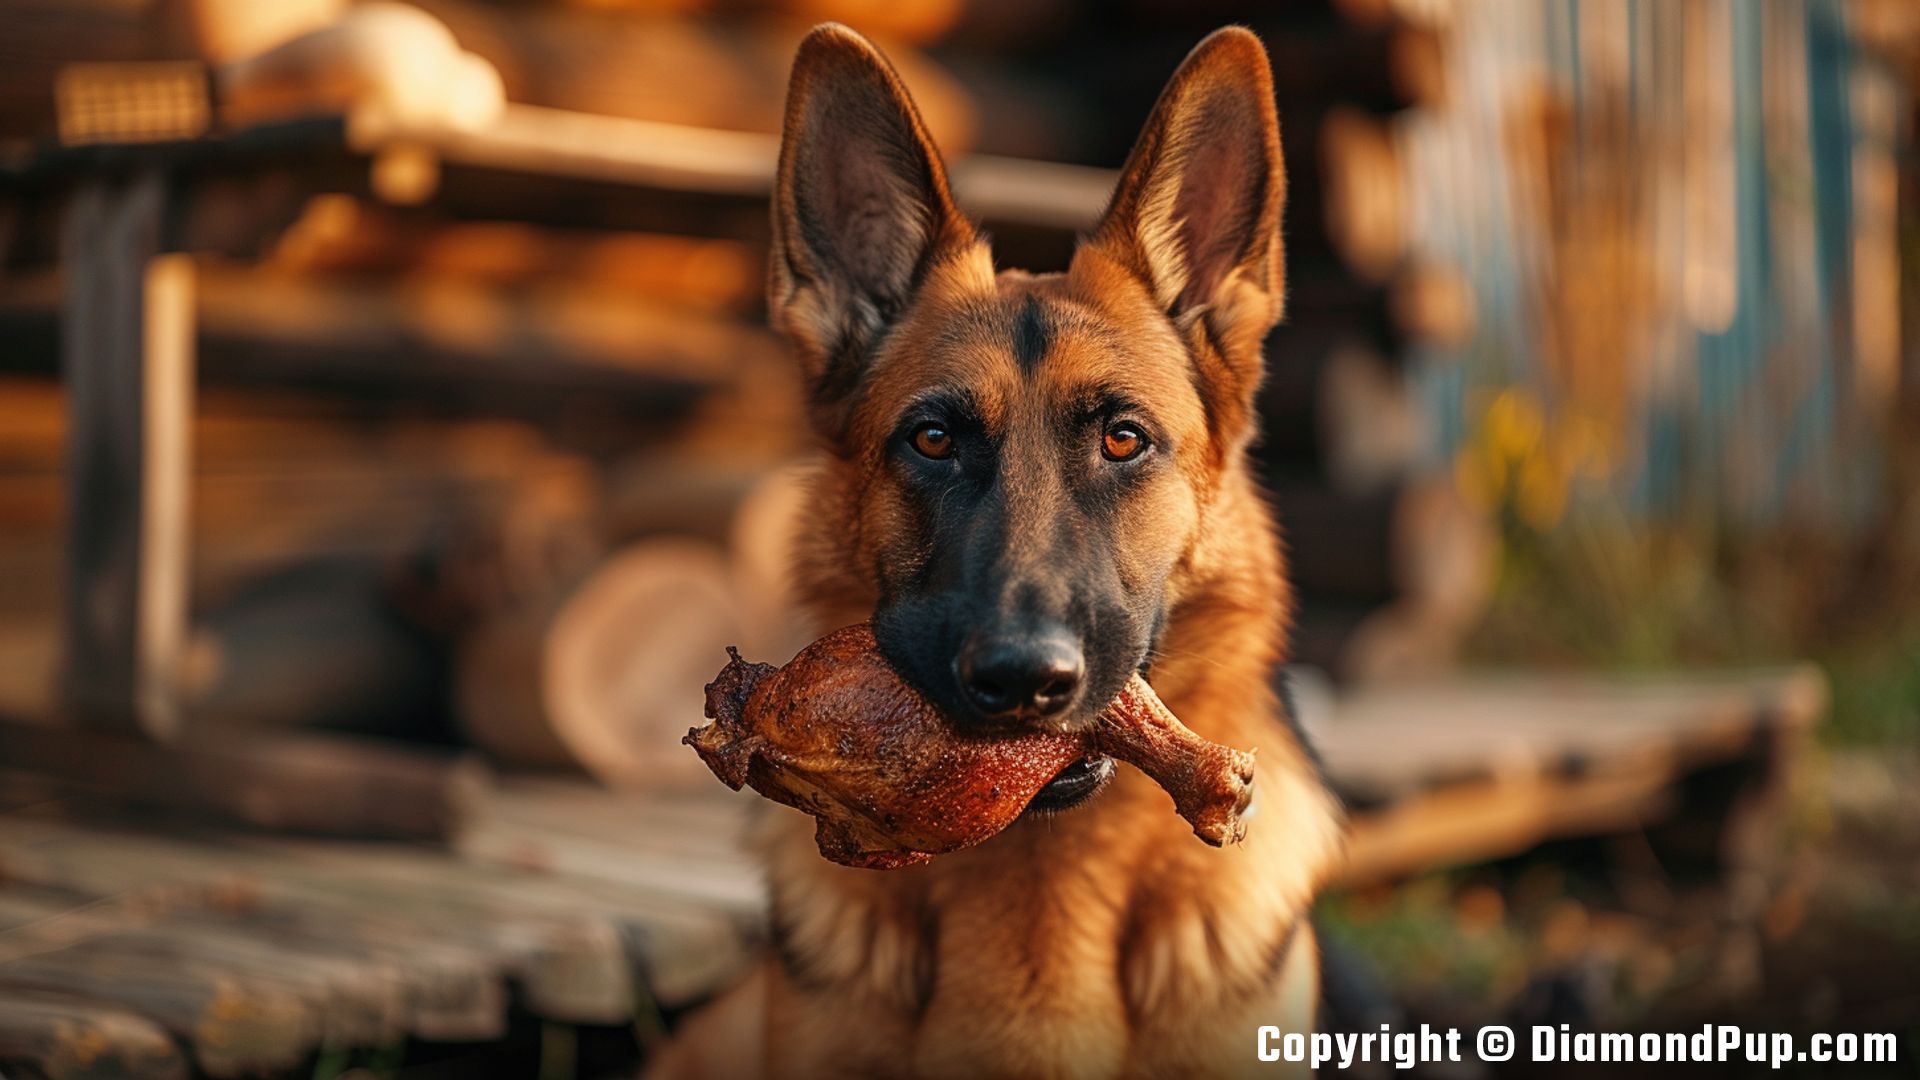 Photograph of a Cute German Shepherd Eating Chicken